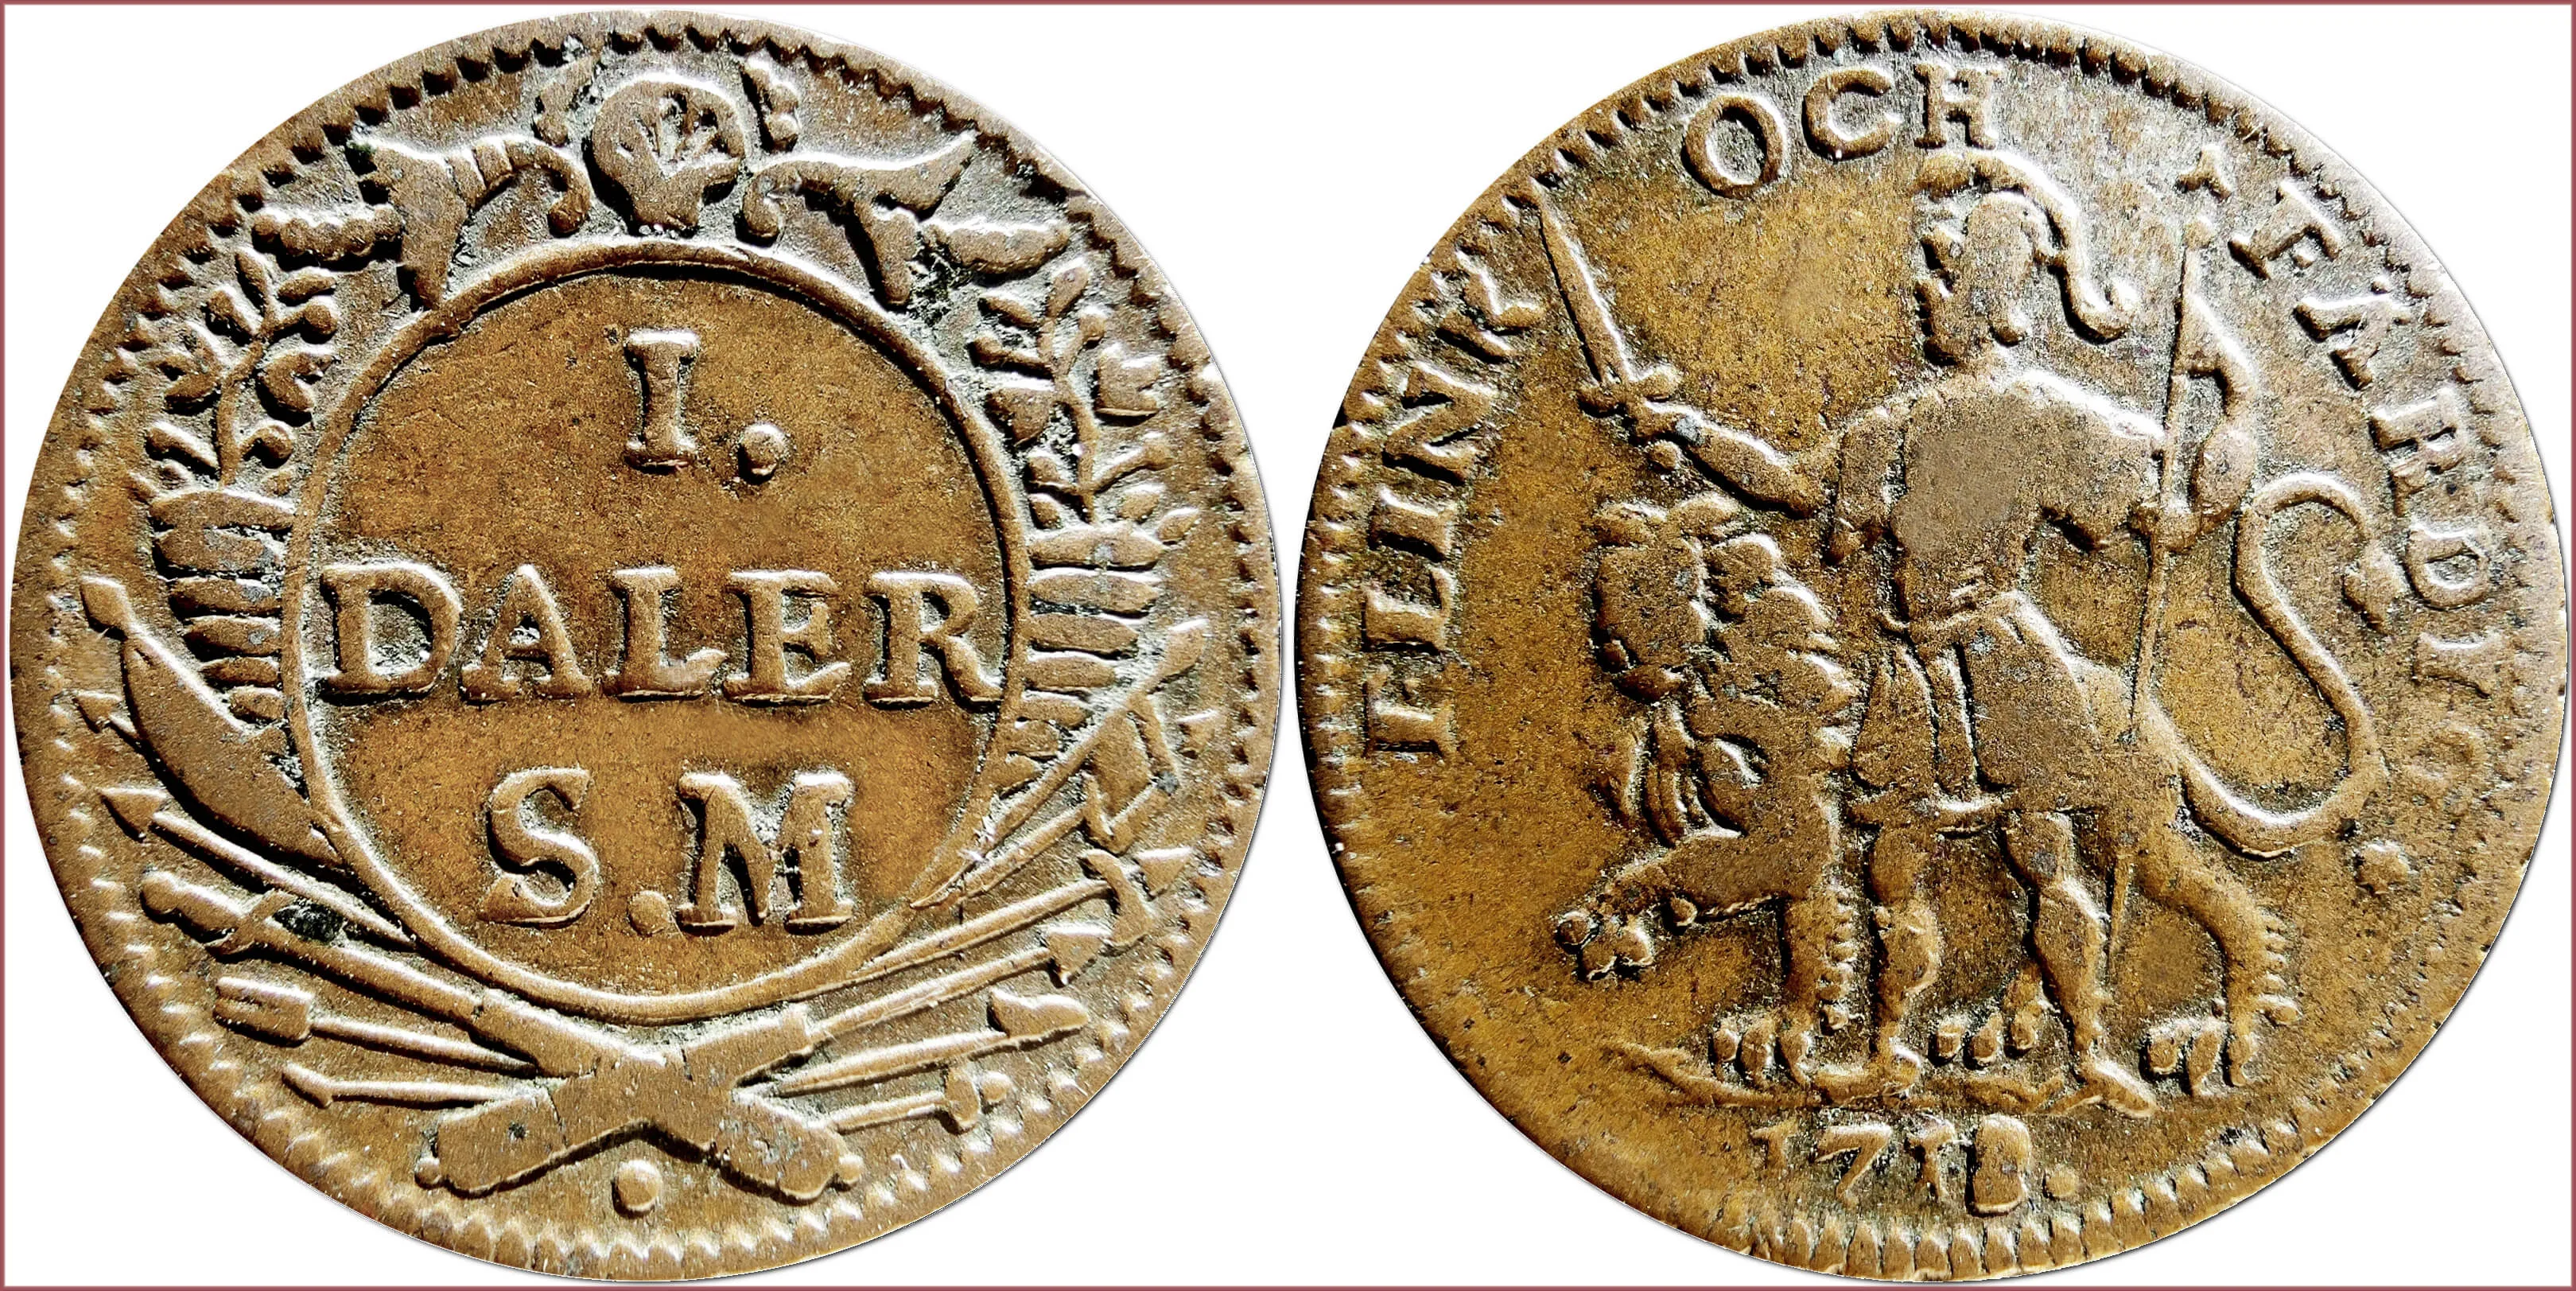 1 daler silvermynt, 1718: Swedish Empire